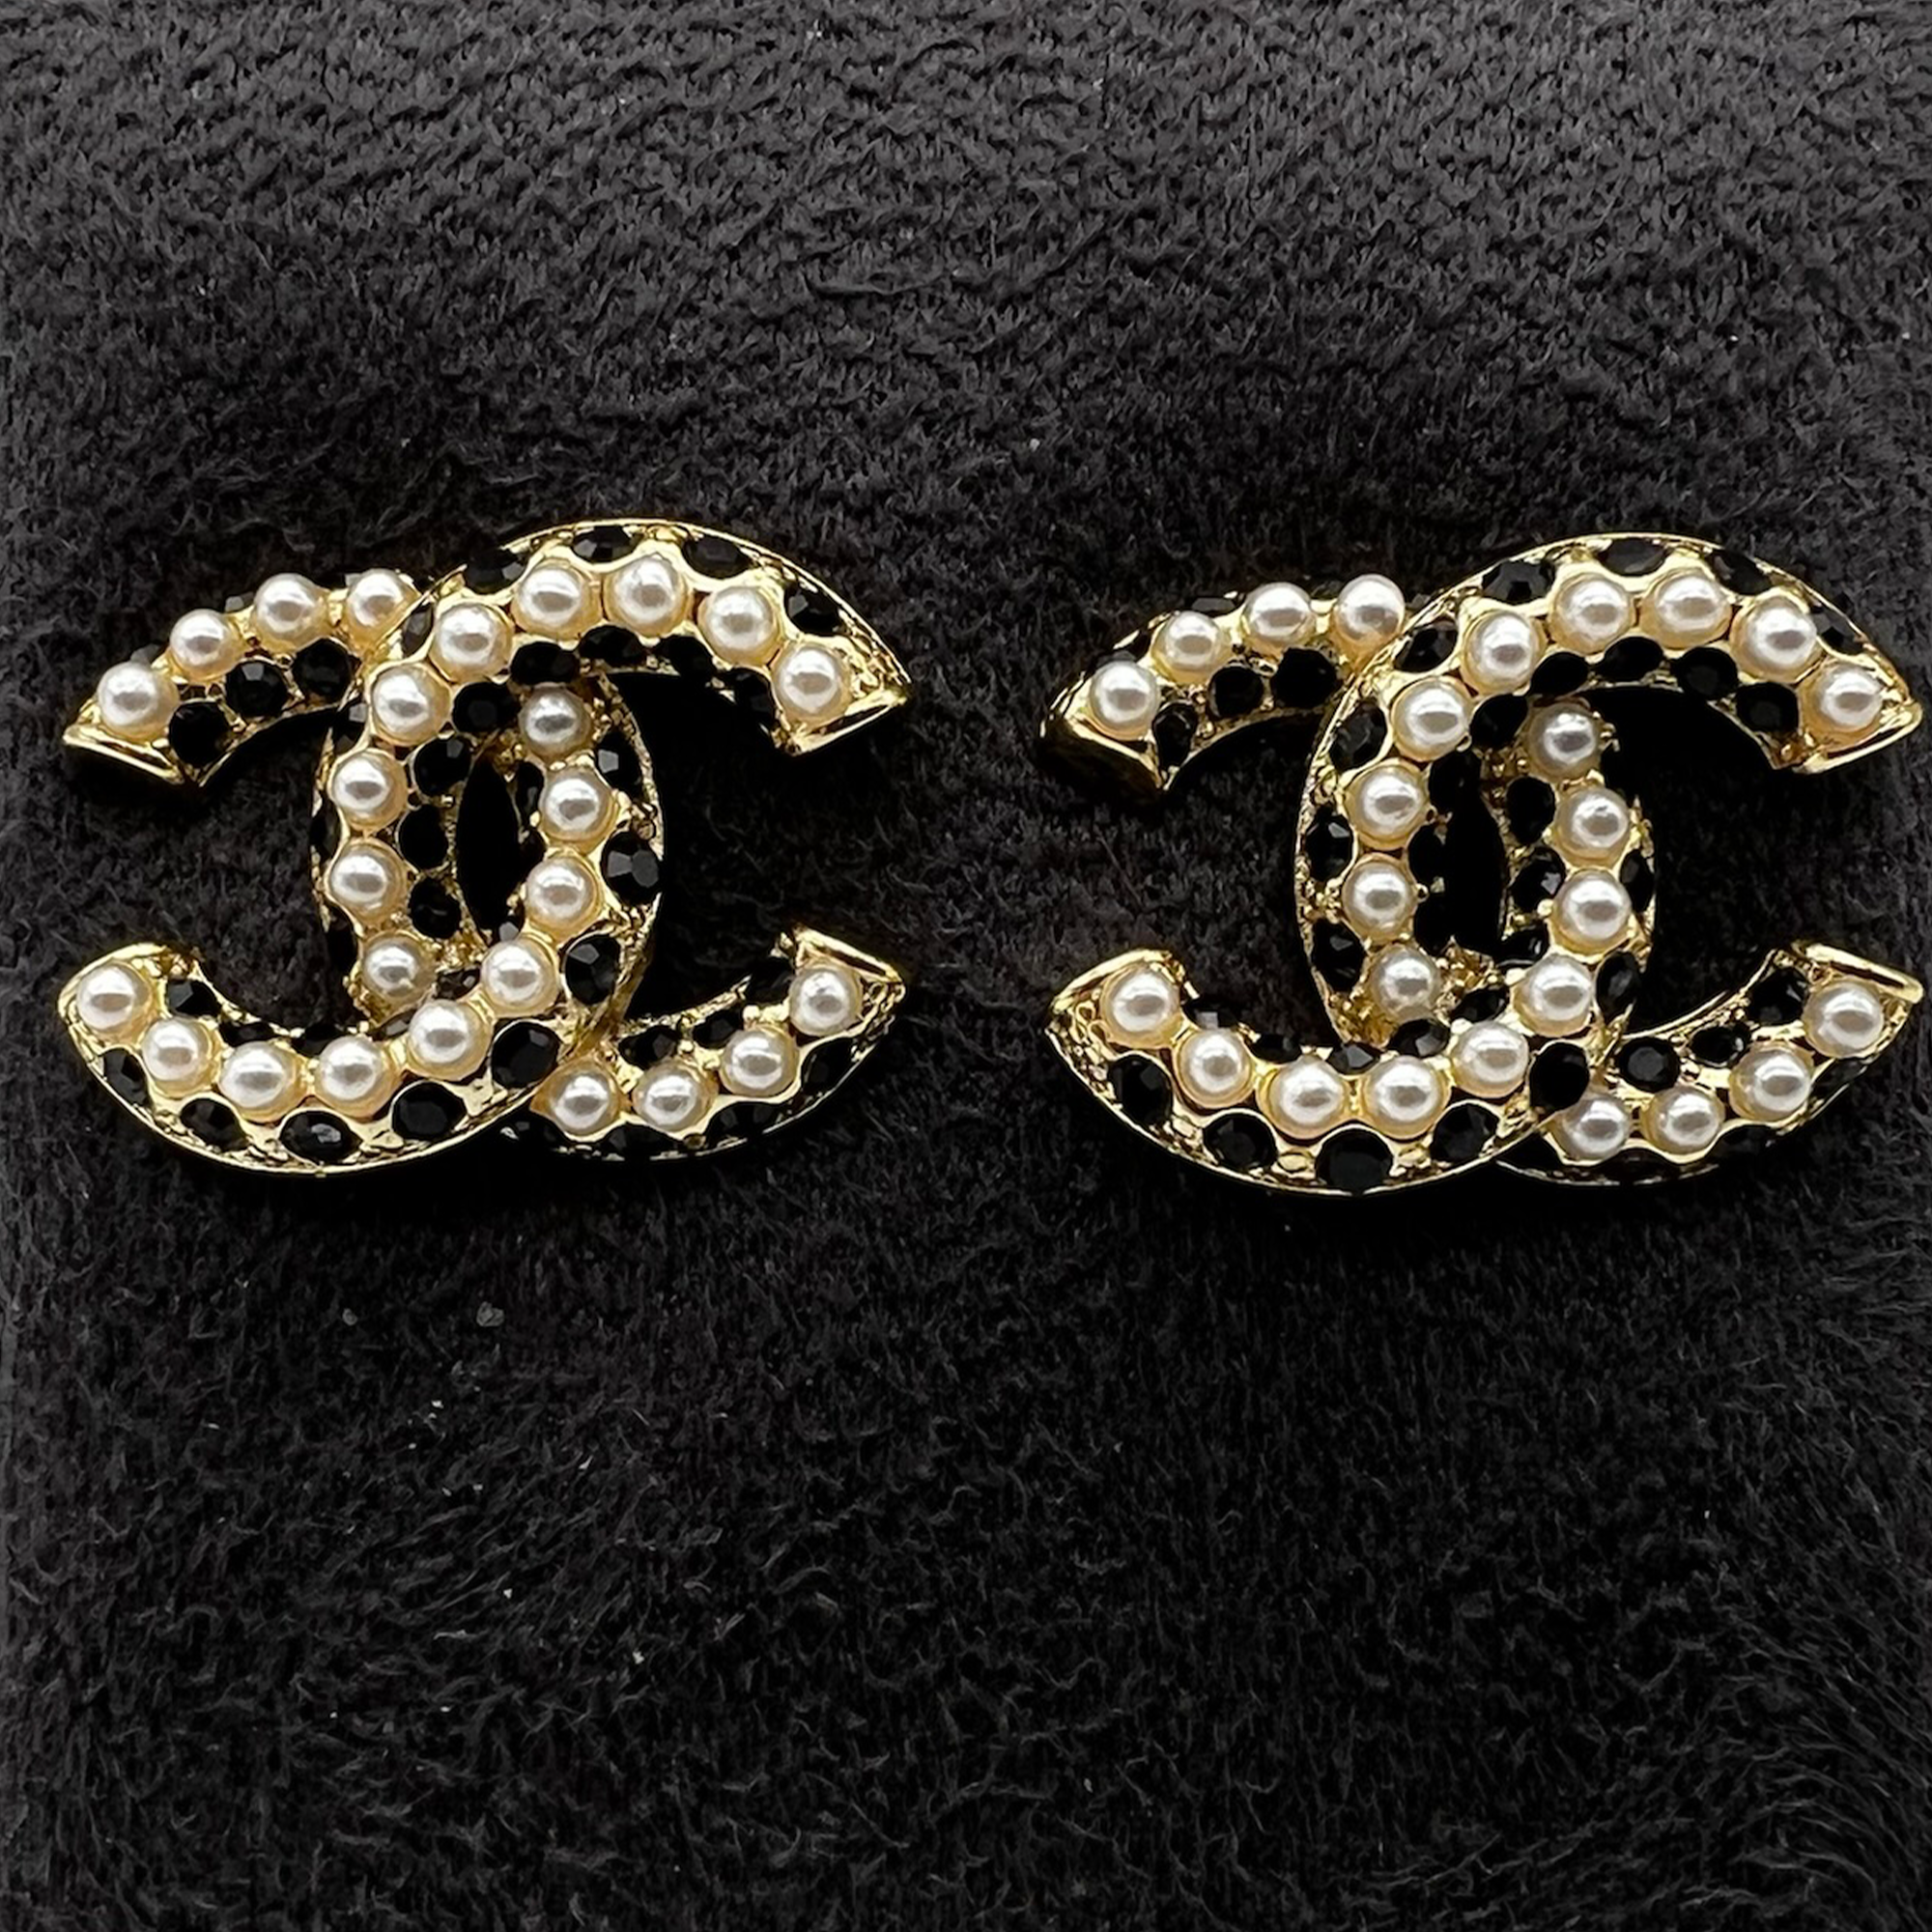 Chanel Double C Earing 18K White Gold Full Diamond With Pearl Eardrop